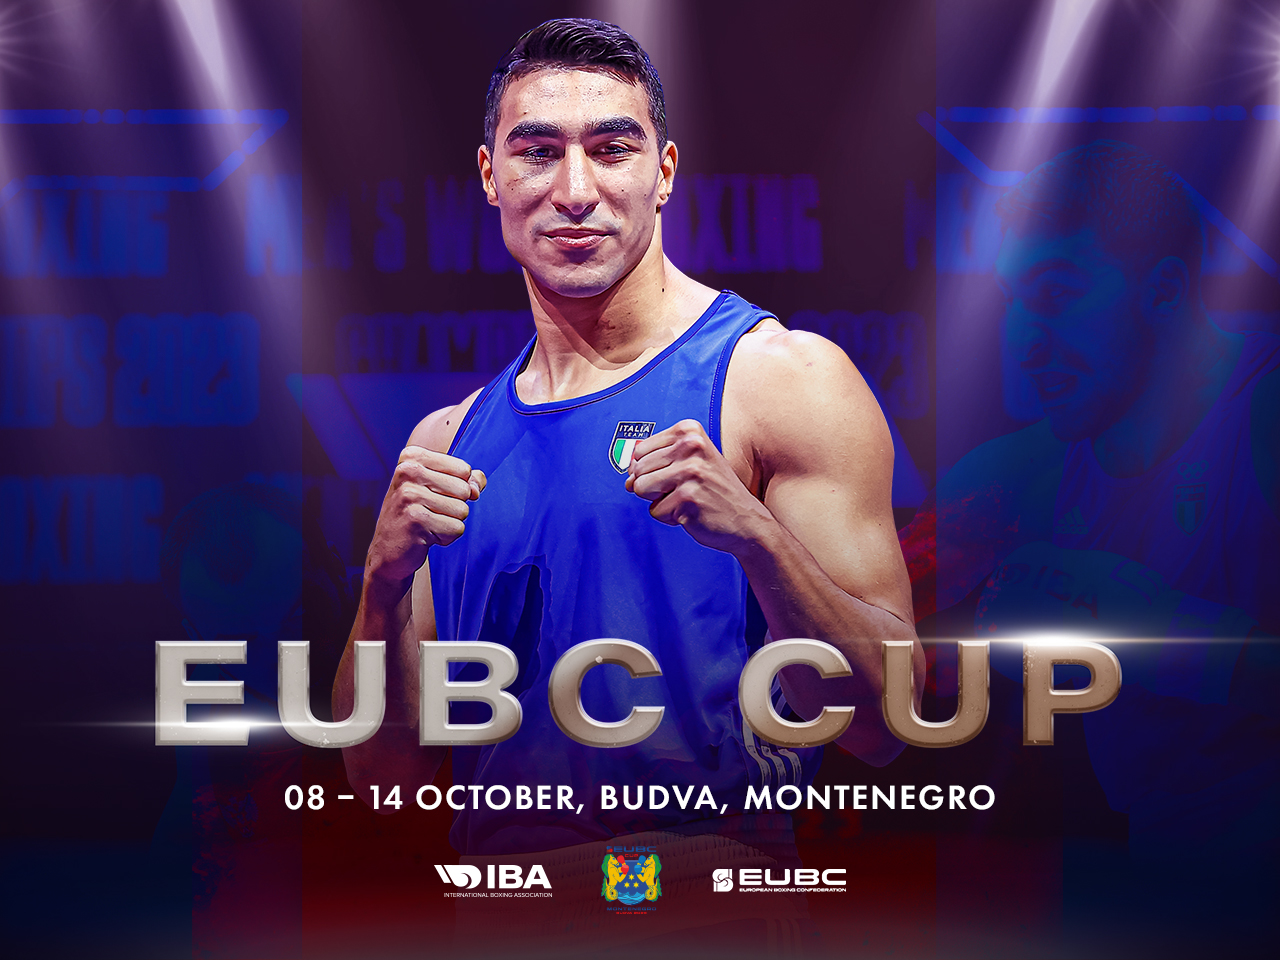 EUBC Cup – 8-14 October in Budva